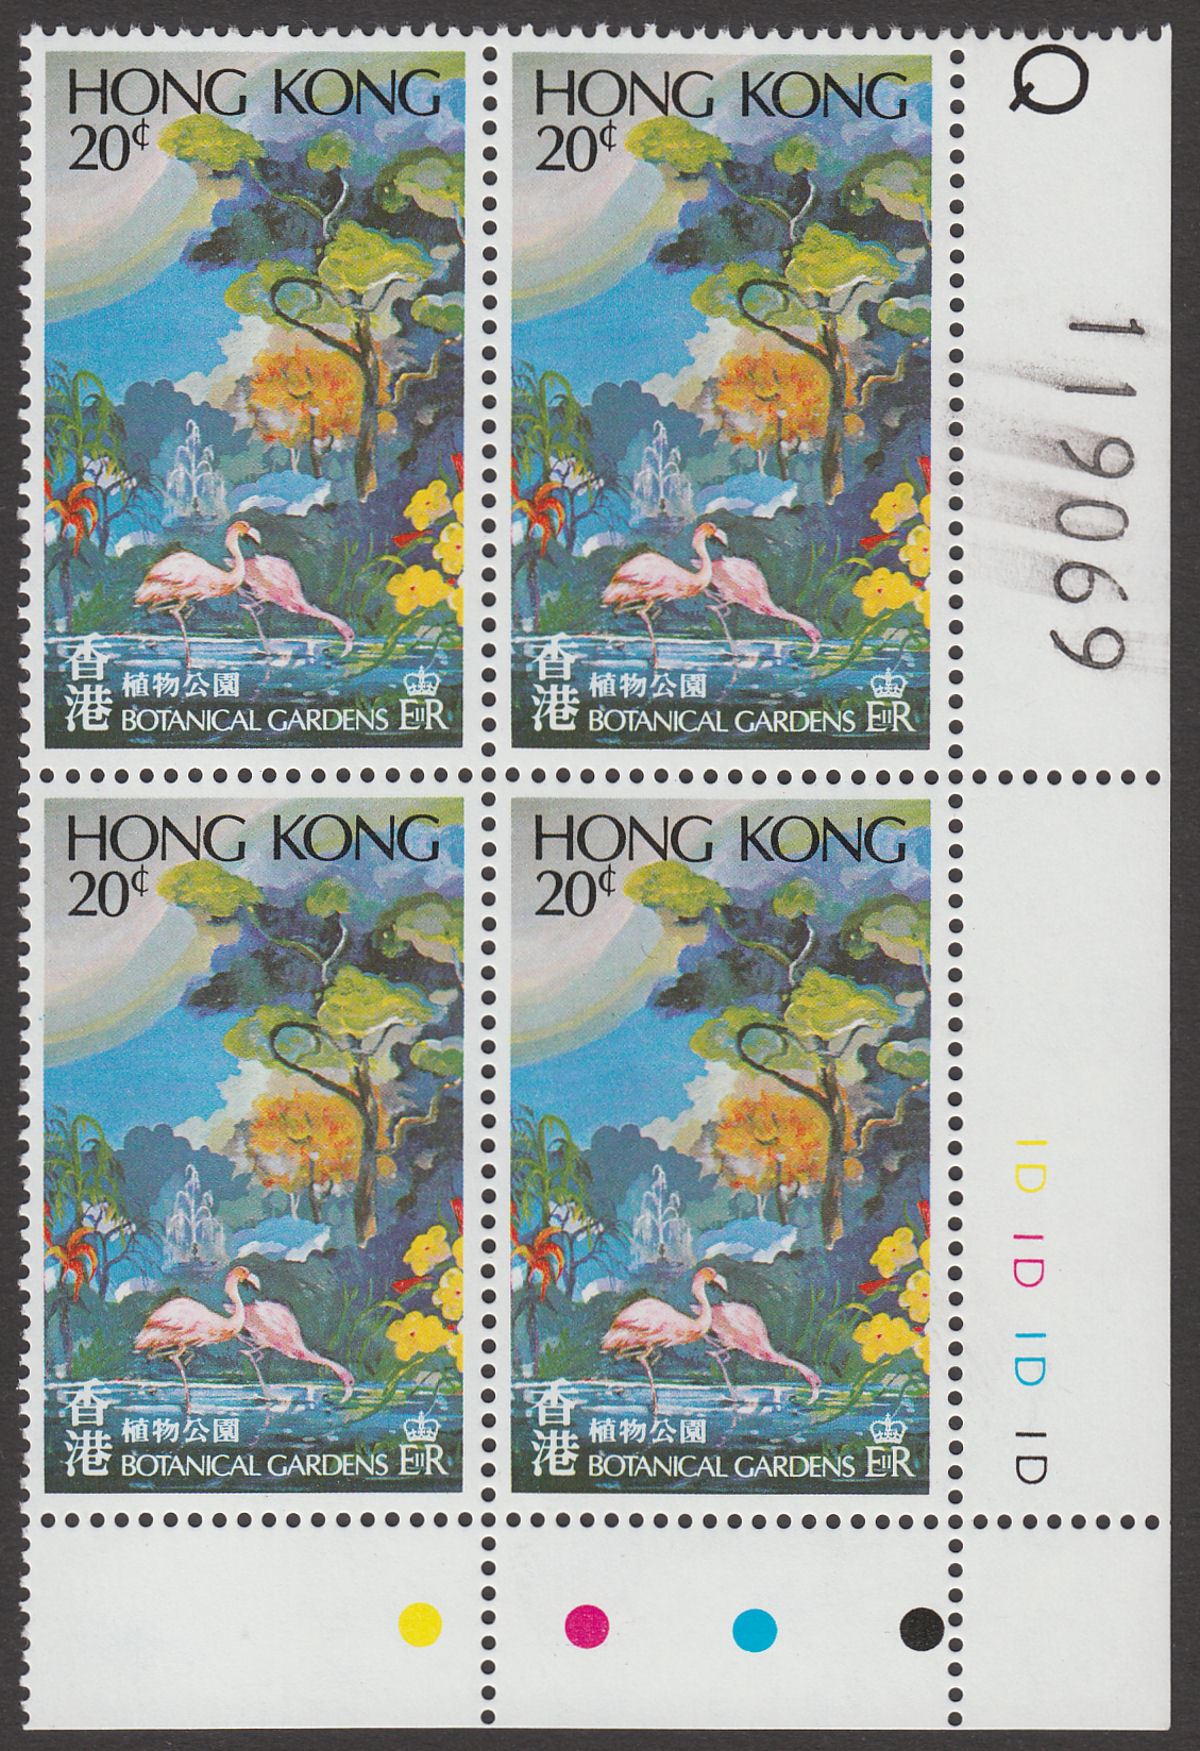 Hong Kong 1980 QEII Botanical Gardens 20c Block of 4 w Sheet Number Mint SG391